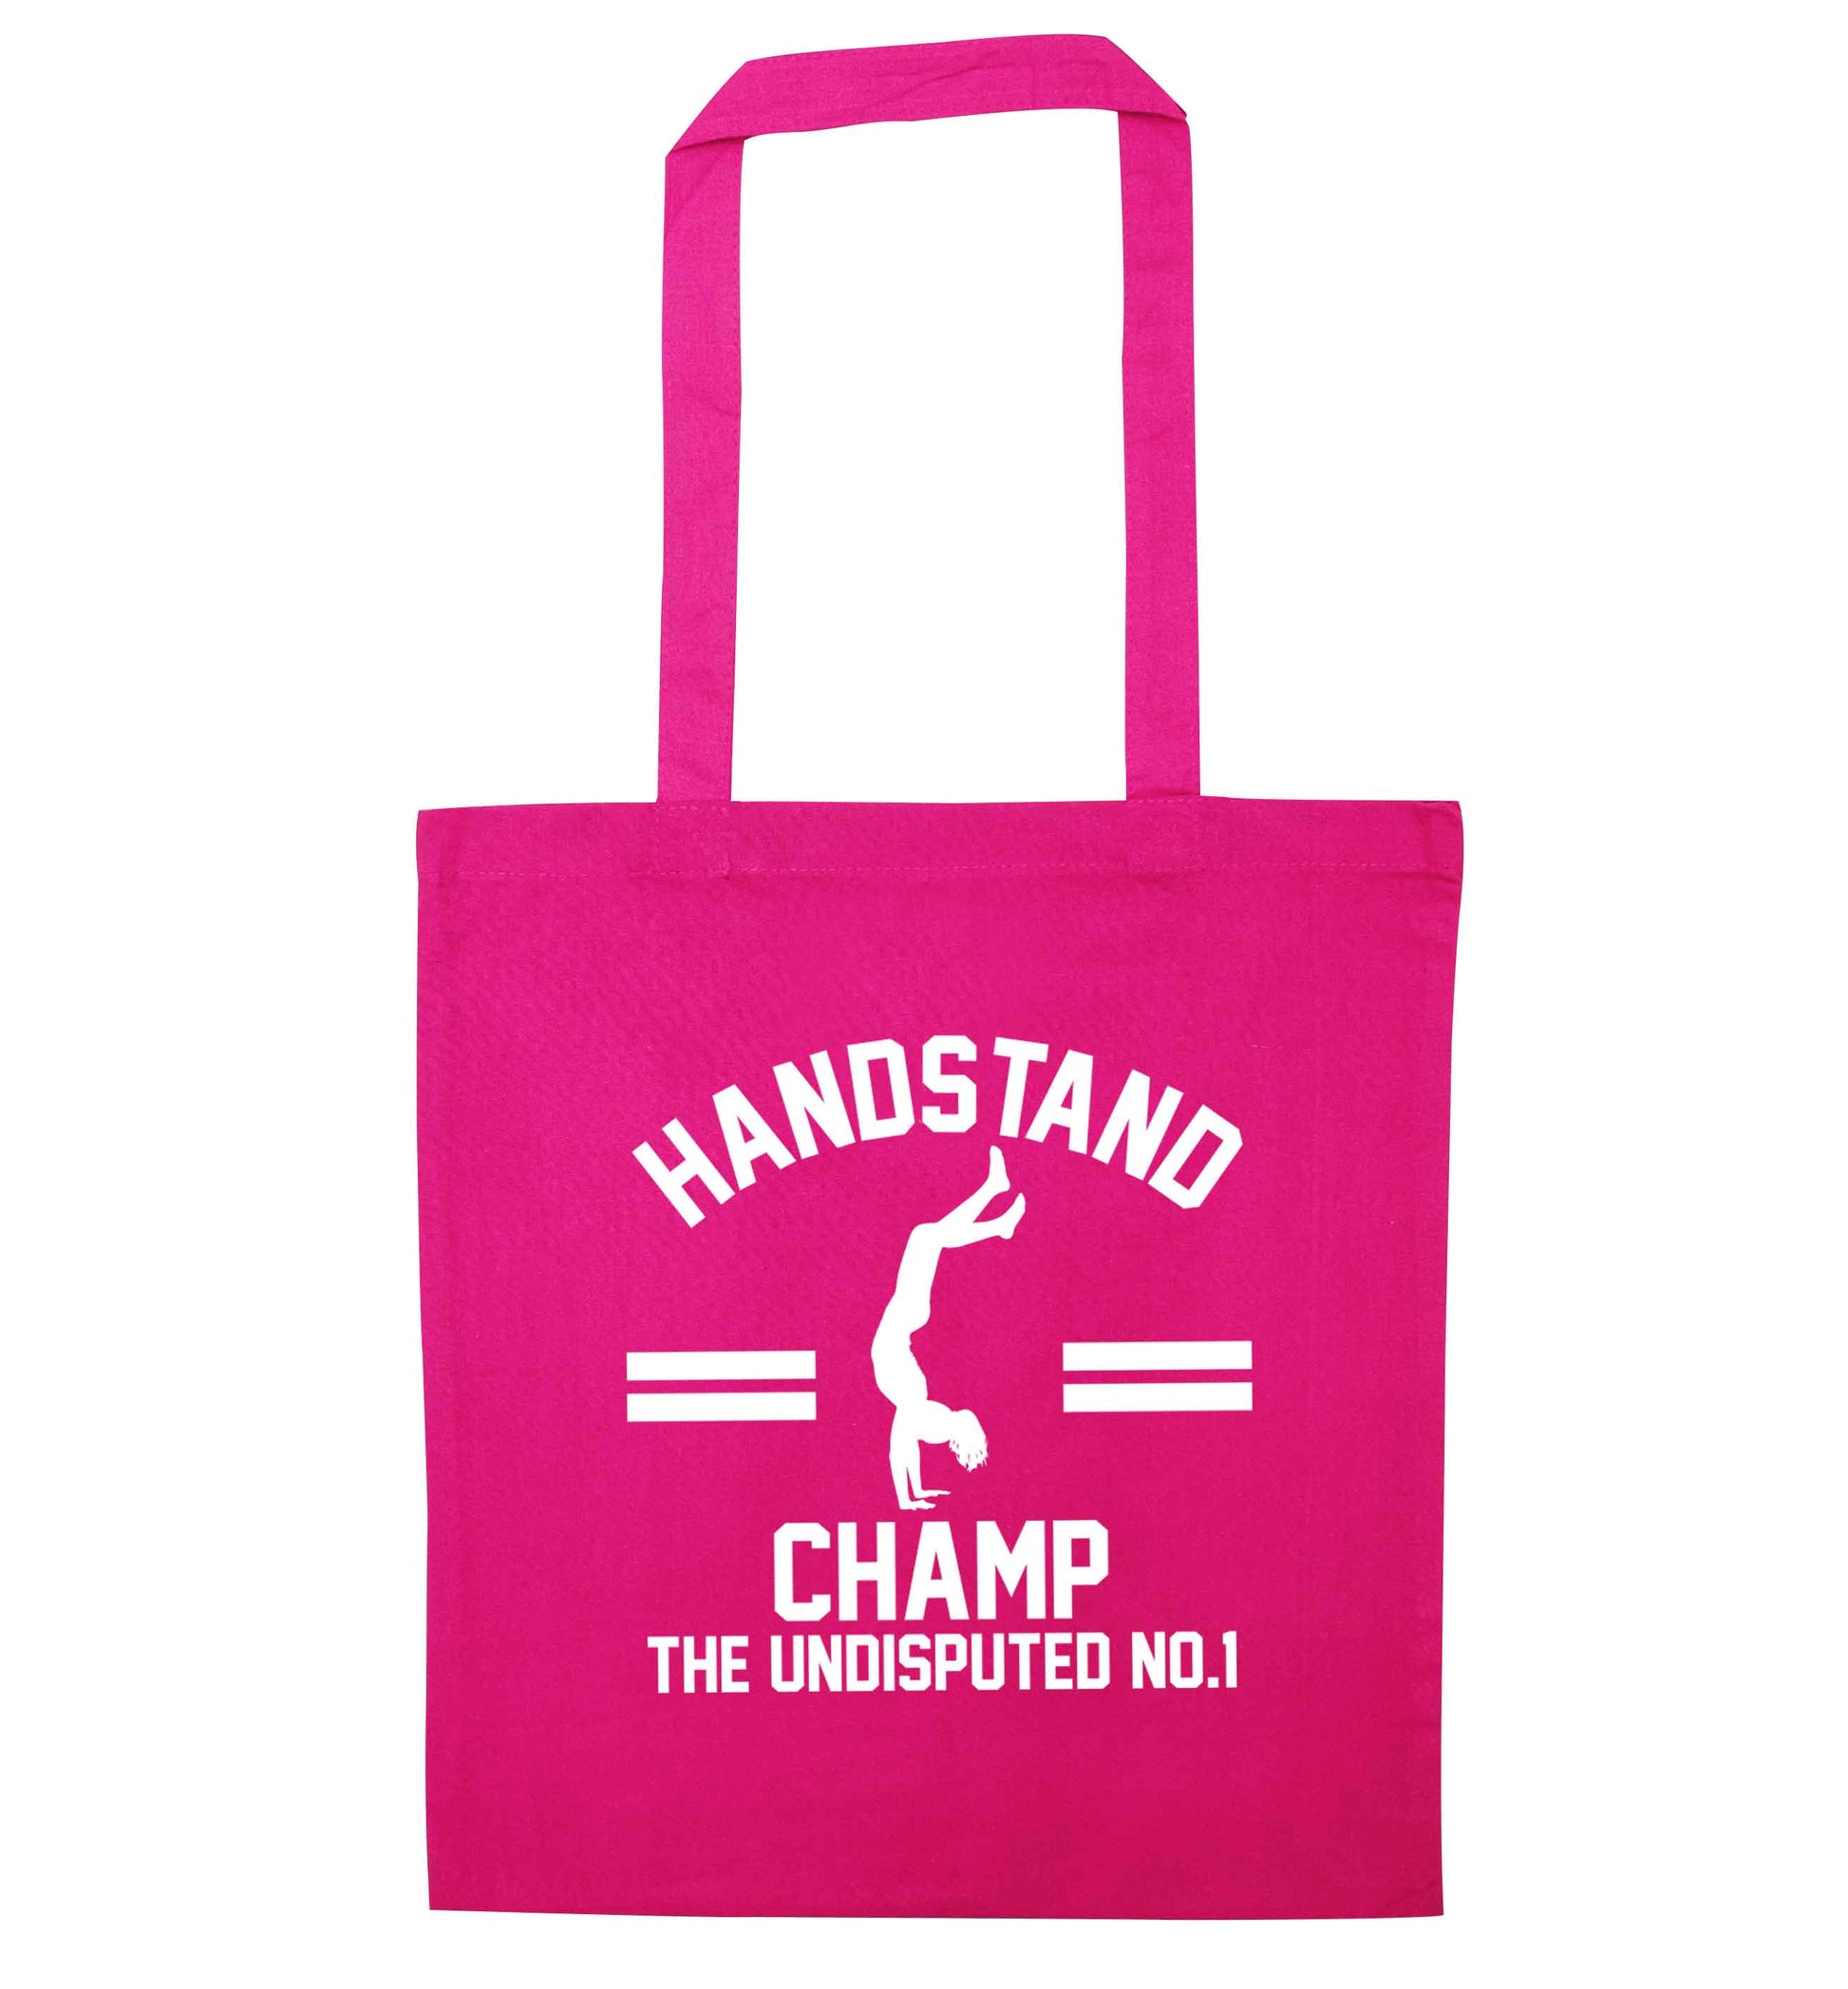 Undisputed handstand championship no.1  pink tote bag